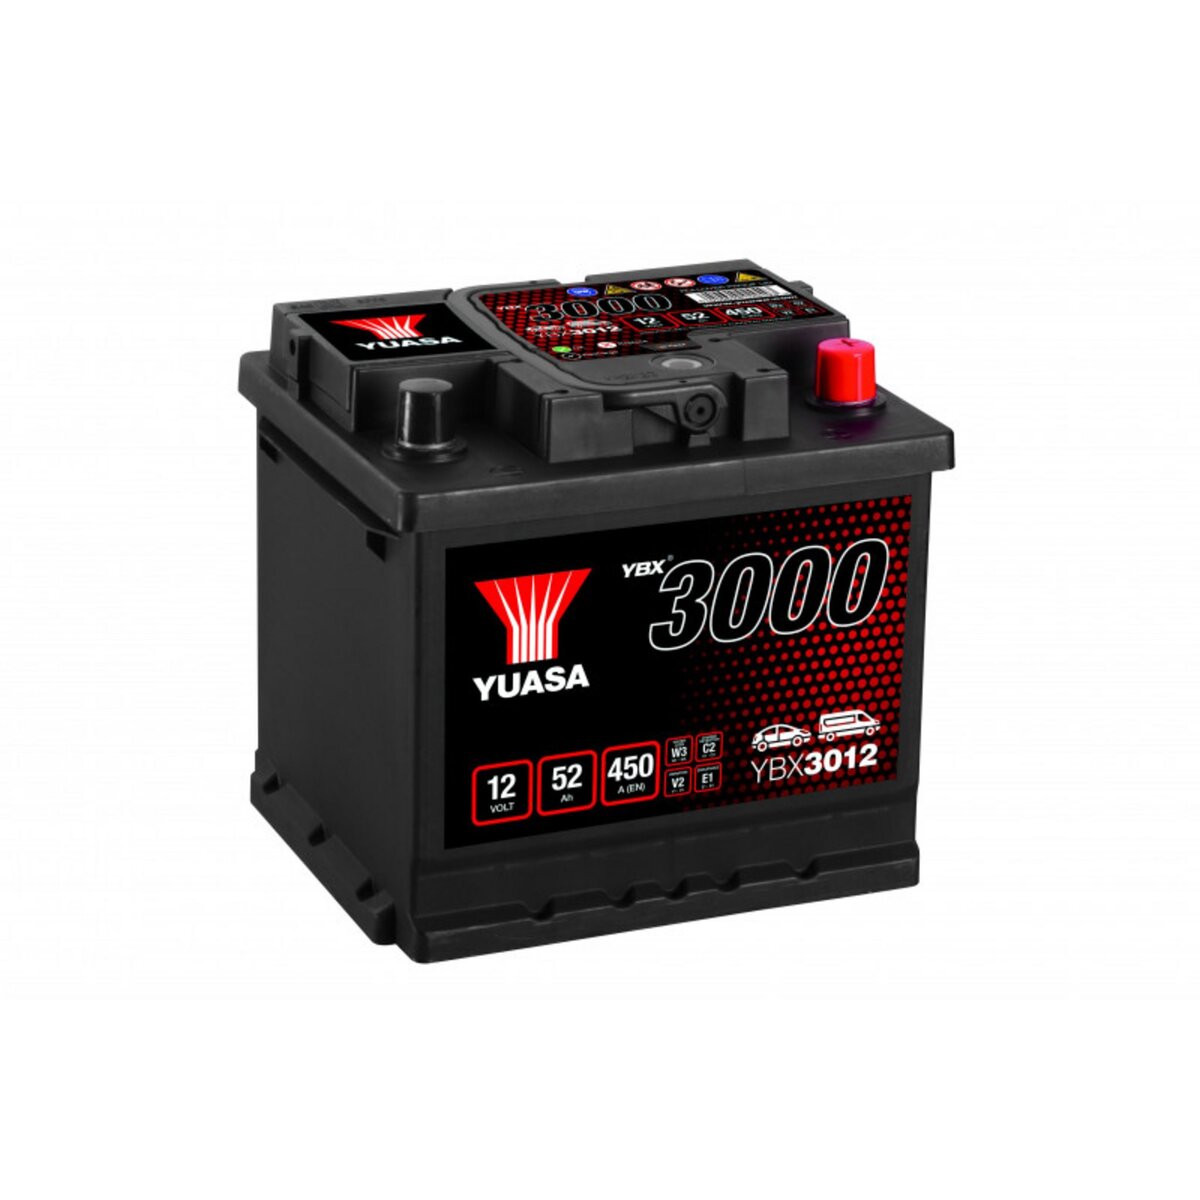 YUASA Batterie Yuasa SMF YBX3012 12V 52ah 450A